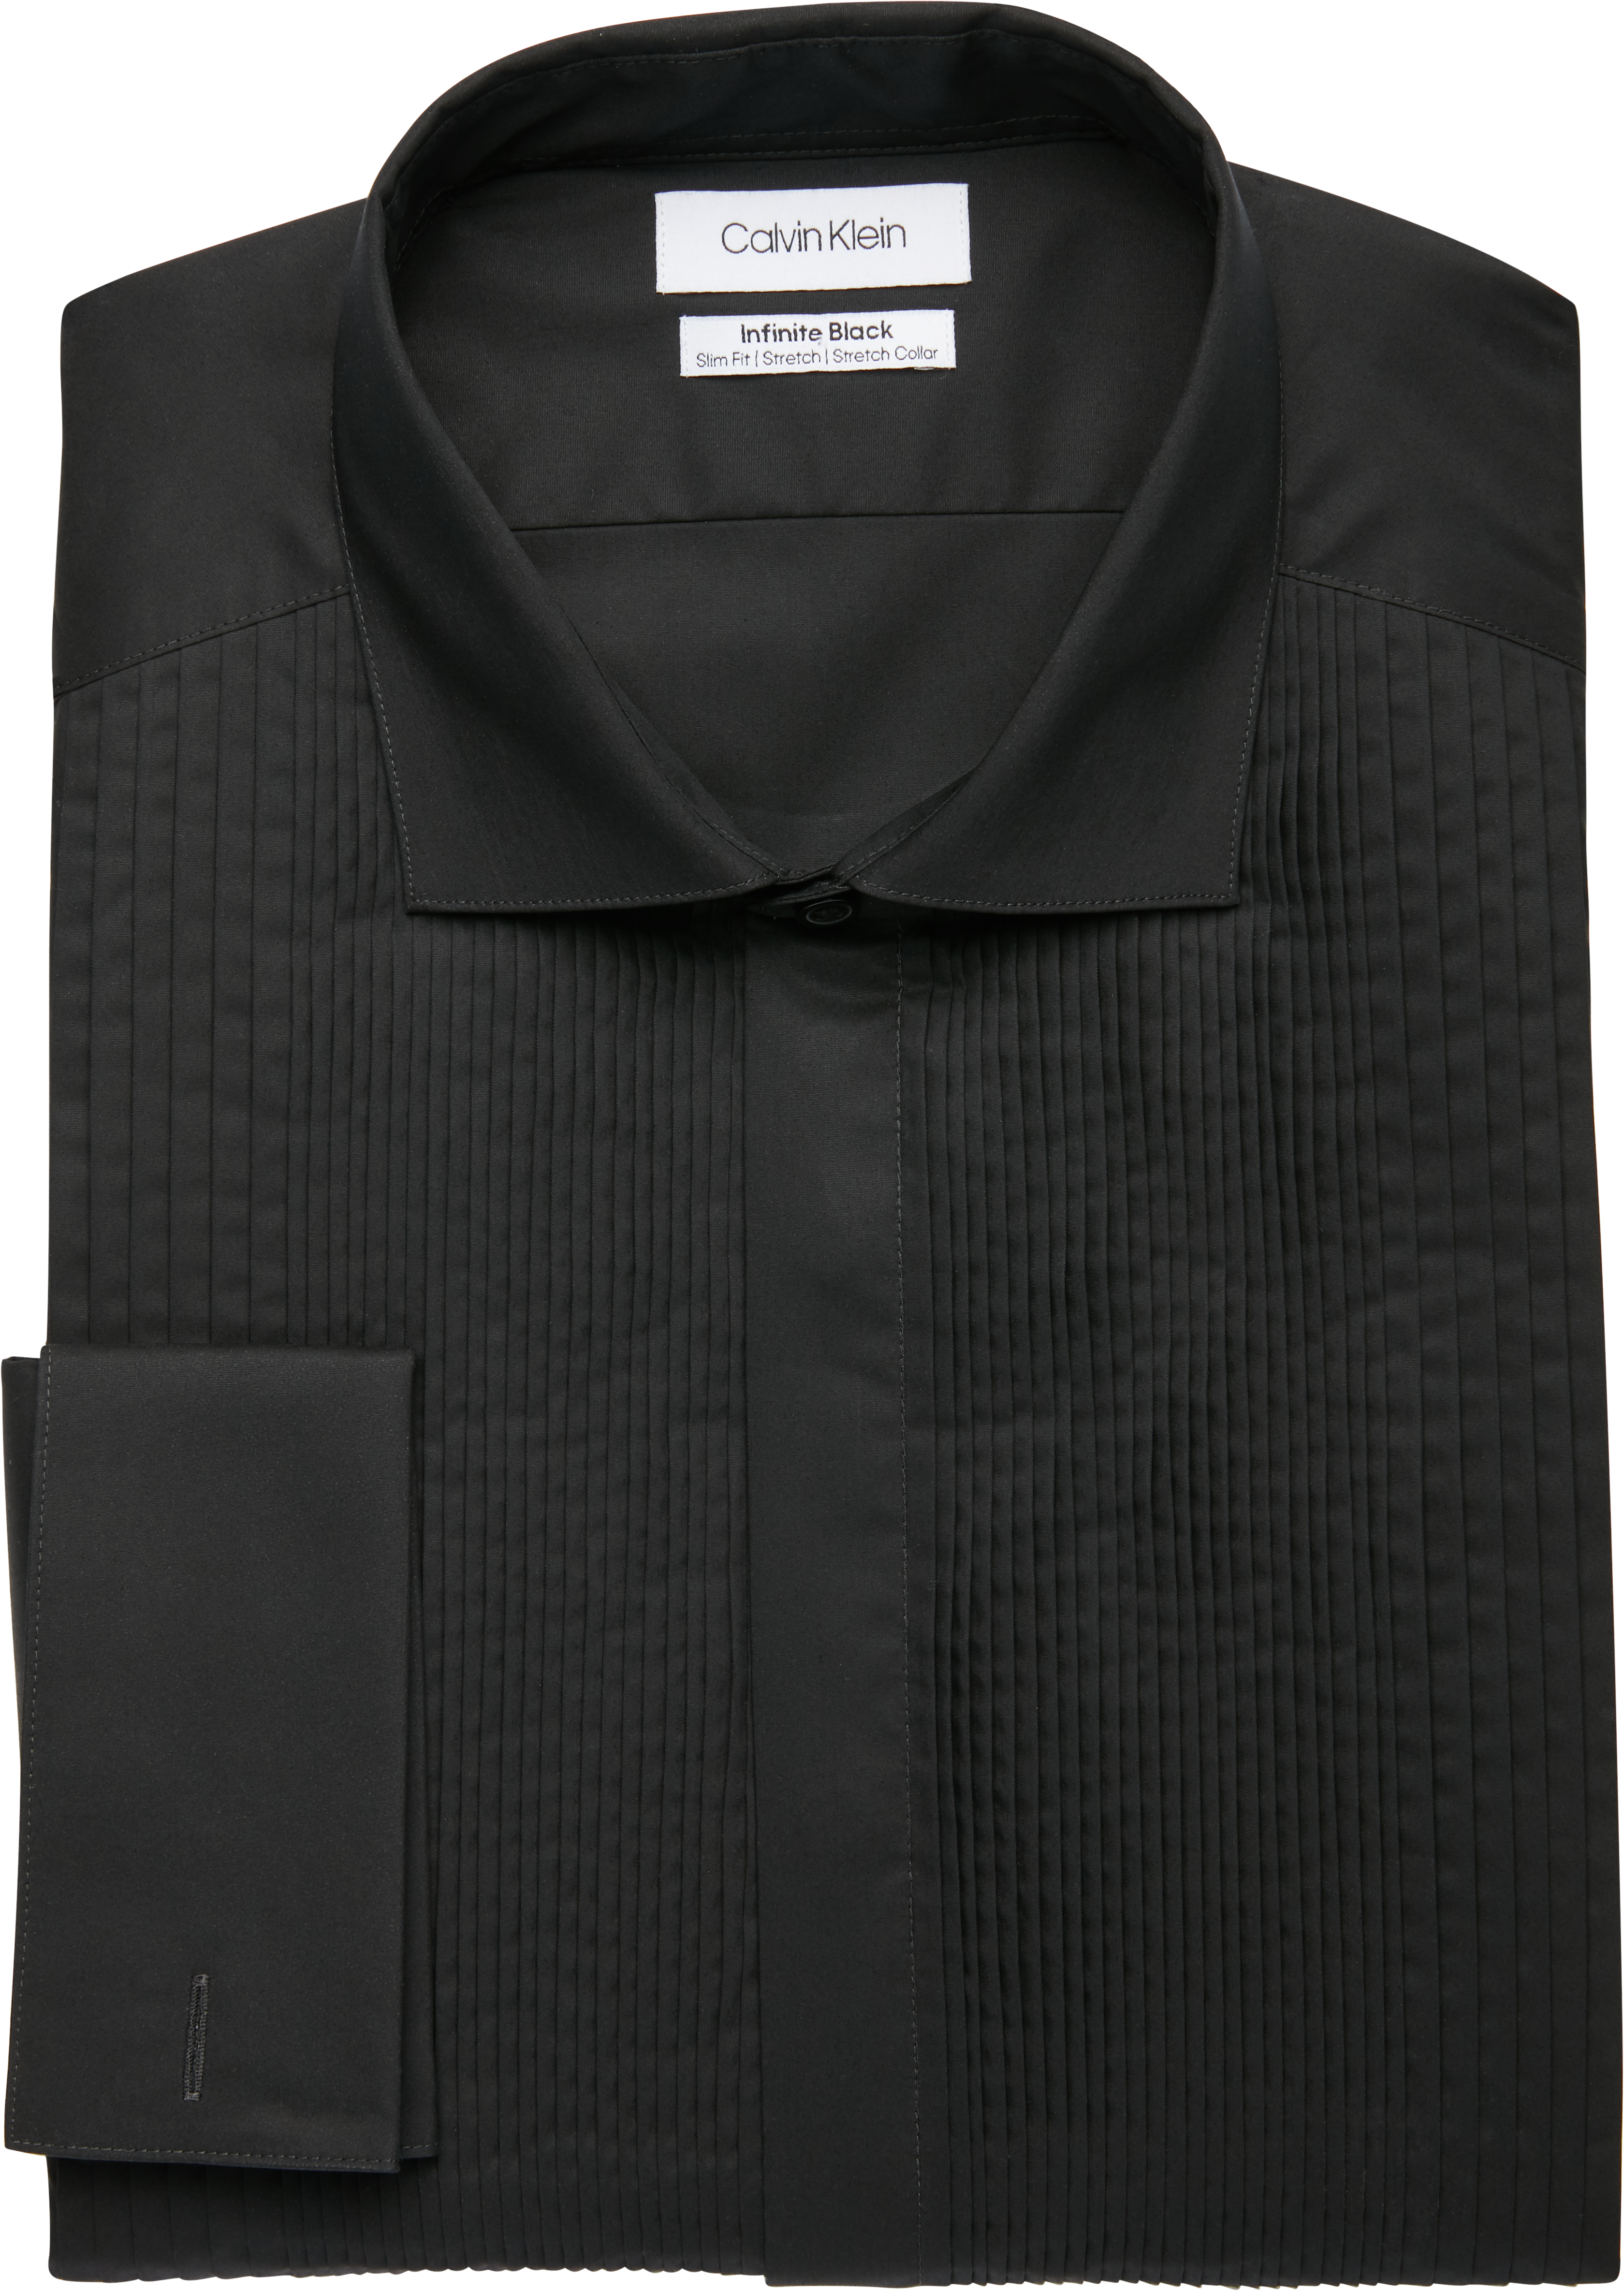 black calvin klein dress shirt